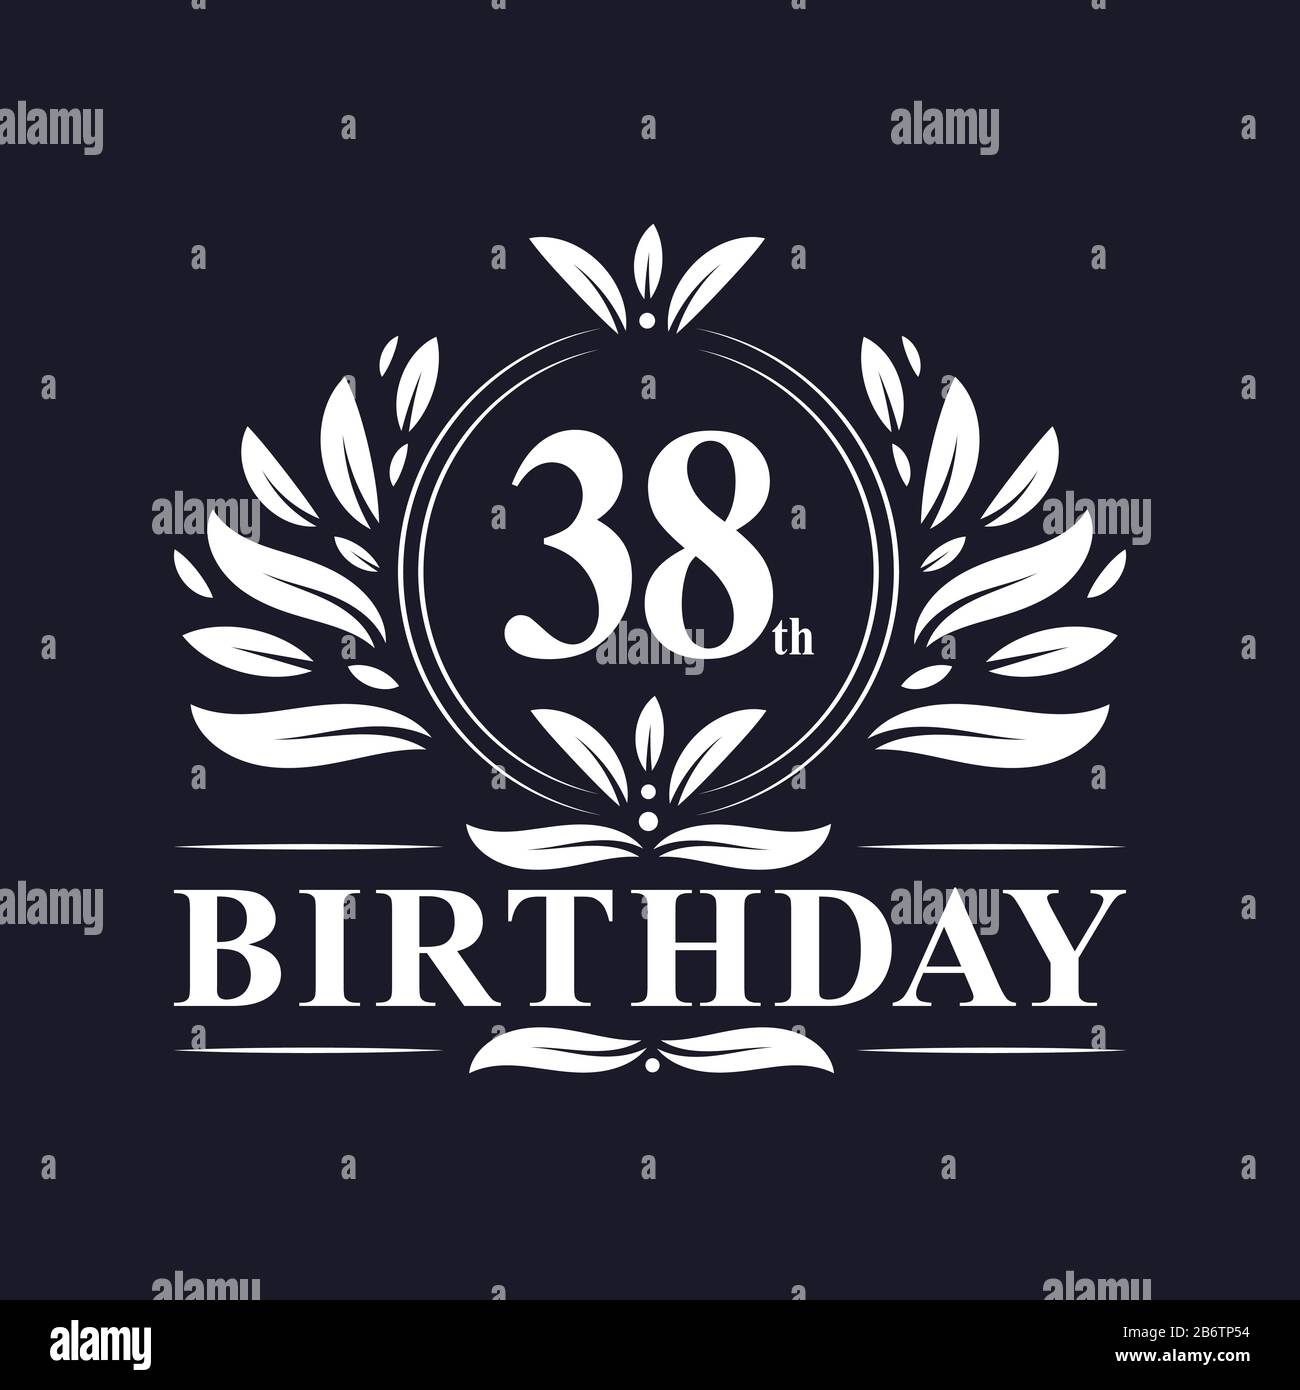 https://c8.alamy.com/comp/2B6TP54/38th-birthday-celebration-luxury-38-years-birthday-logo-design-2B6TP54.jpg